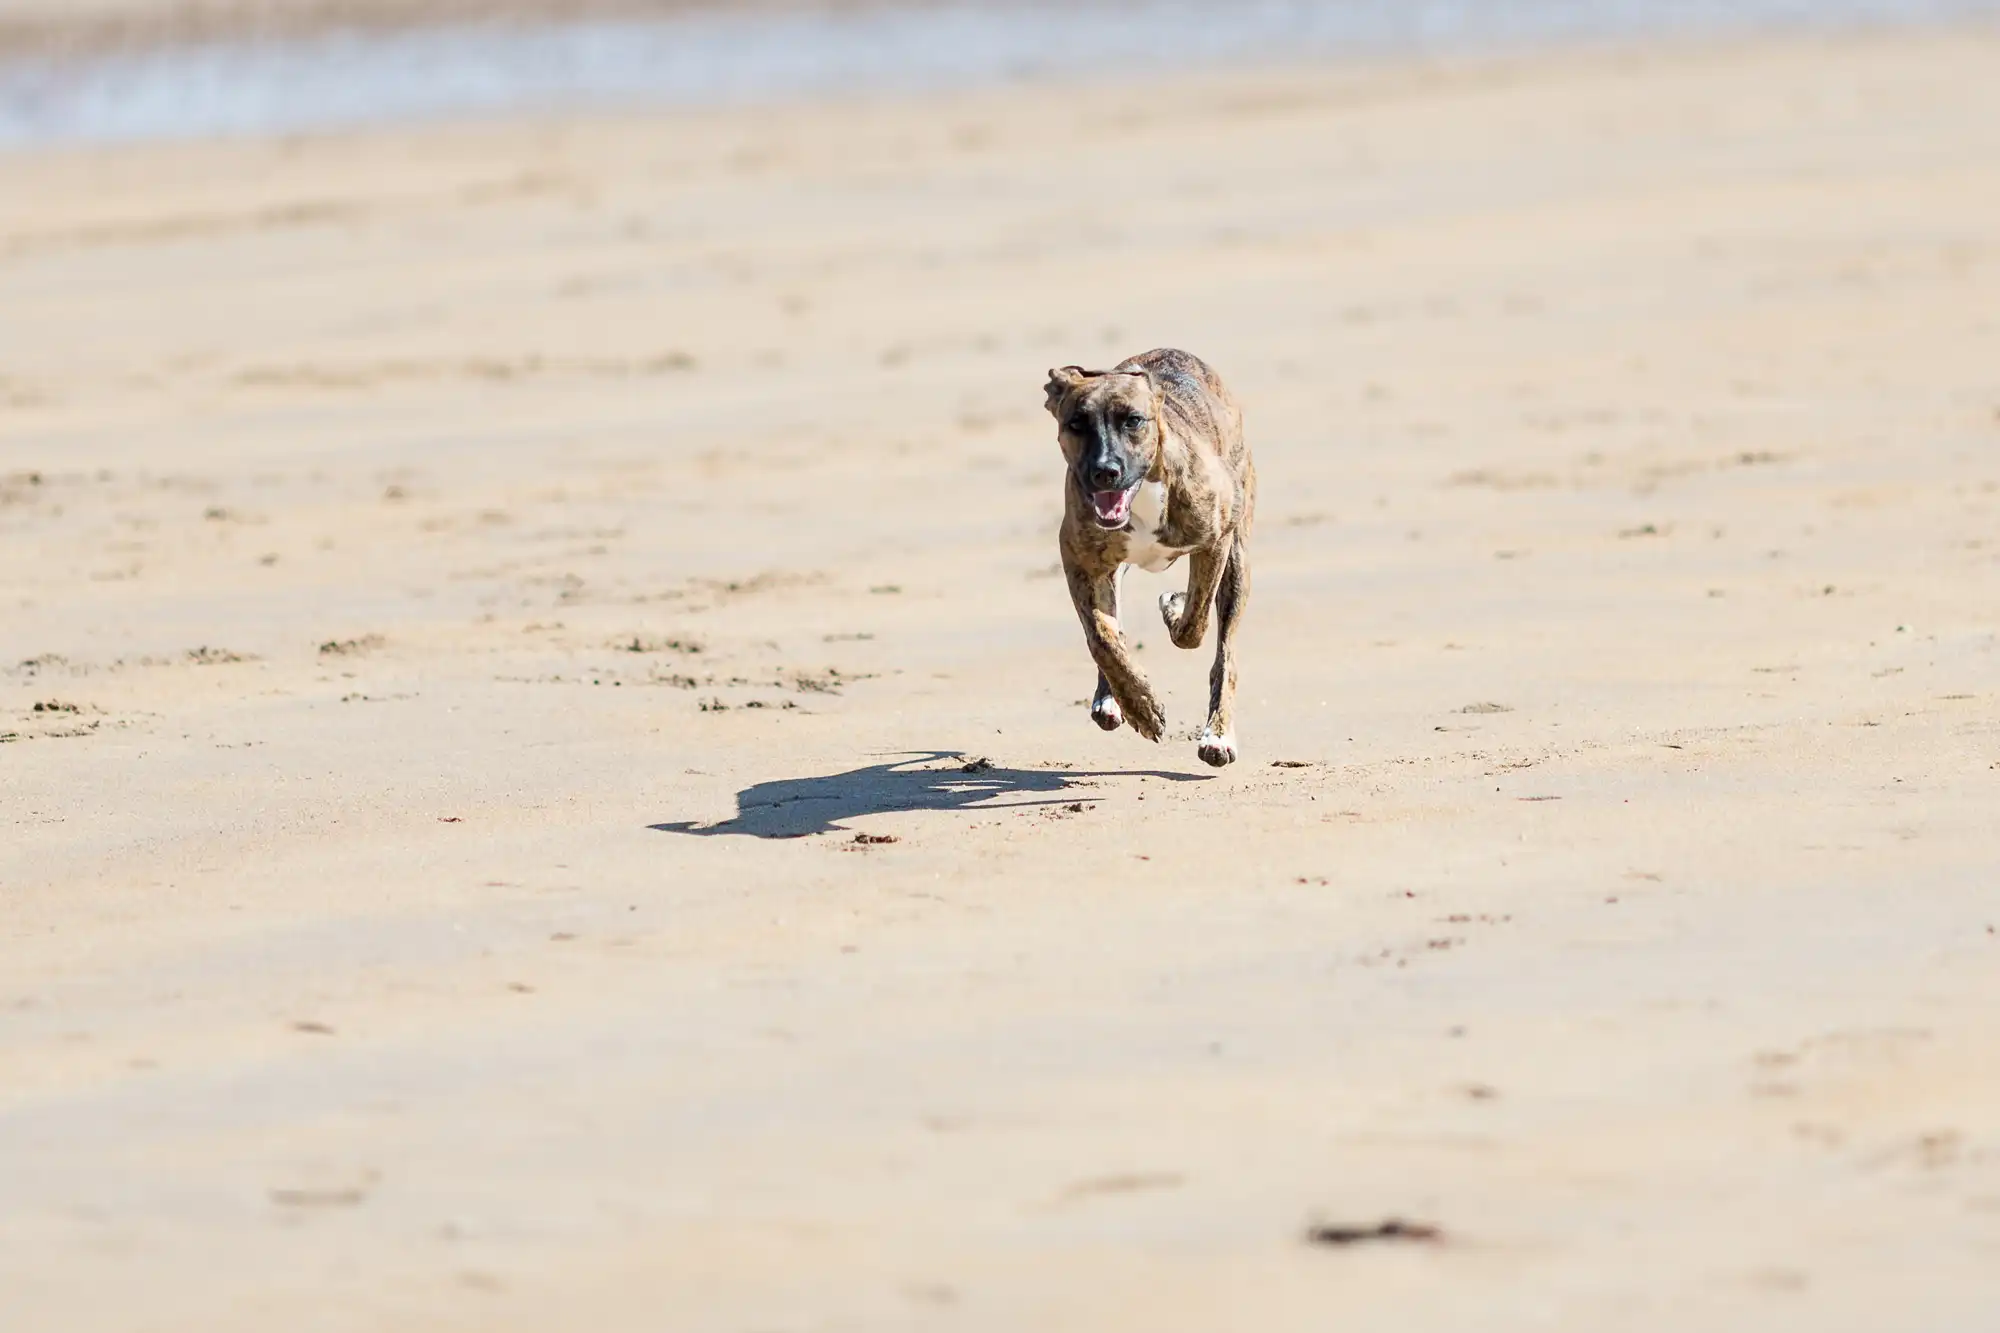 A greyhound running at full speed on a sandy beach, casting a sharp shadow under bright sunlight.